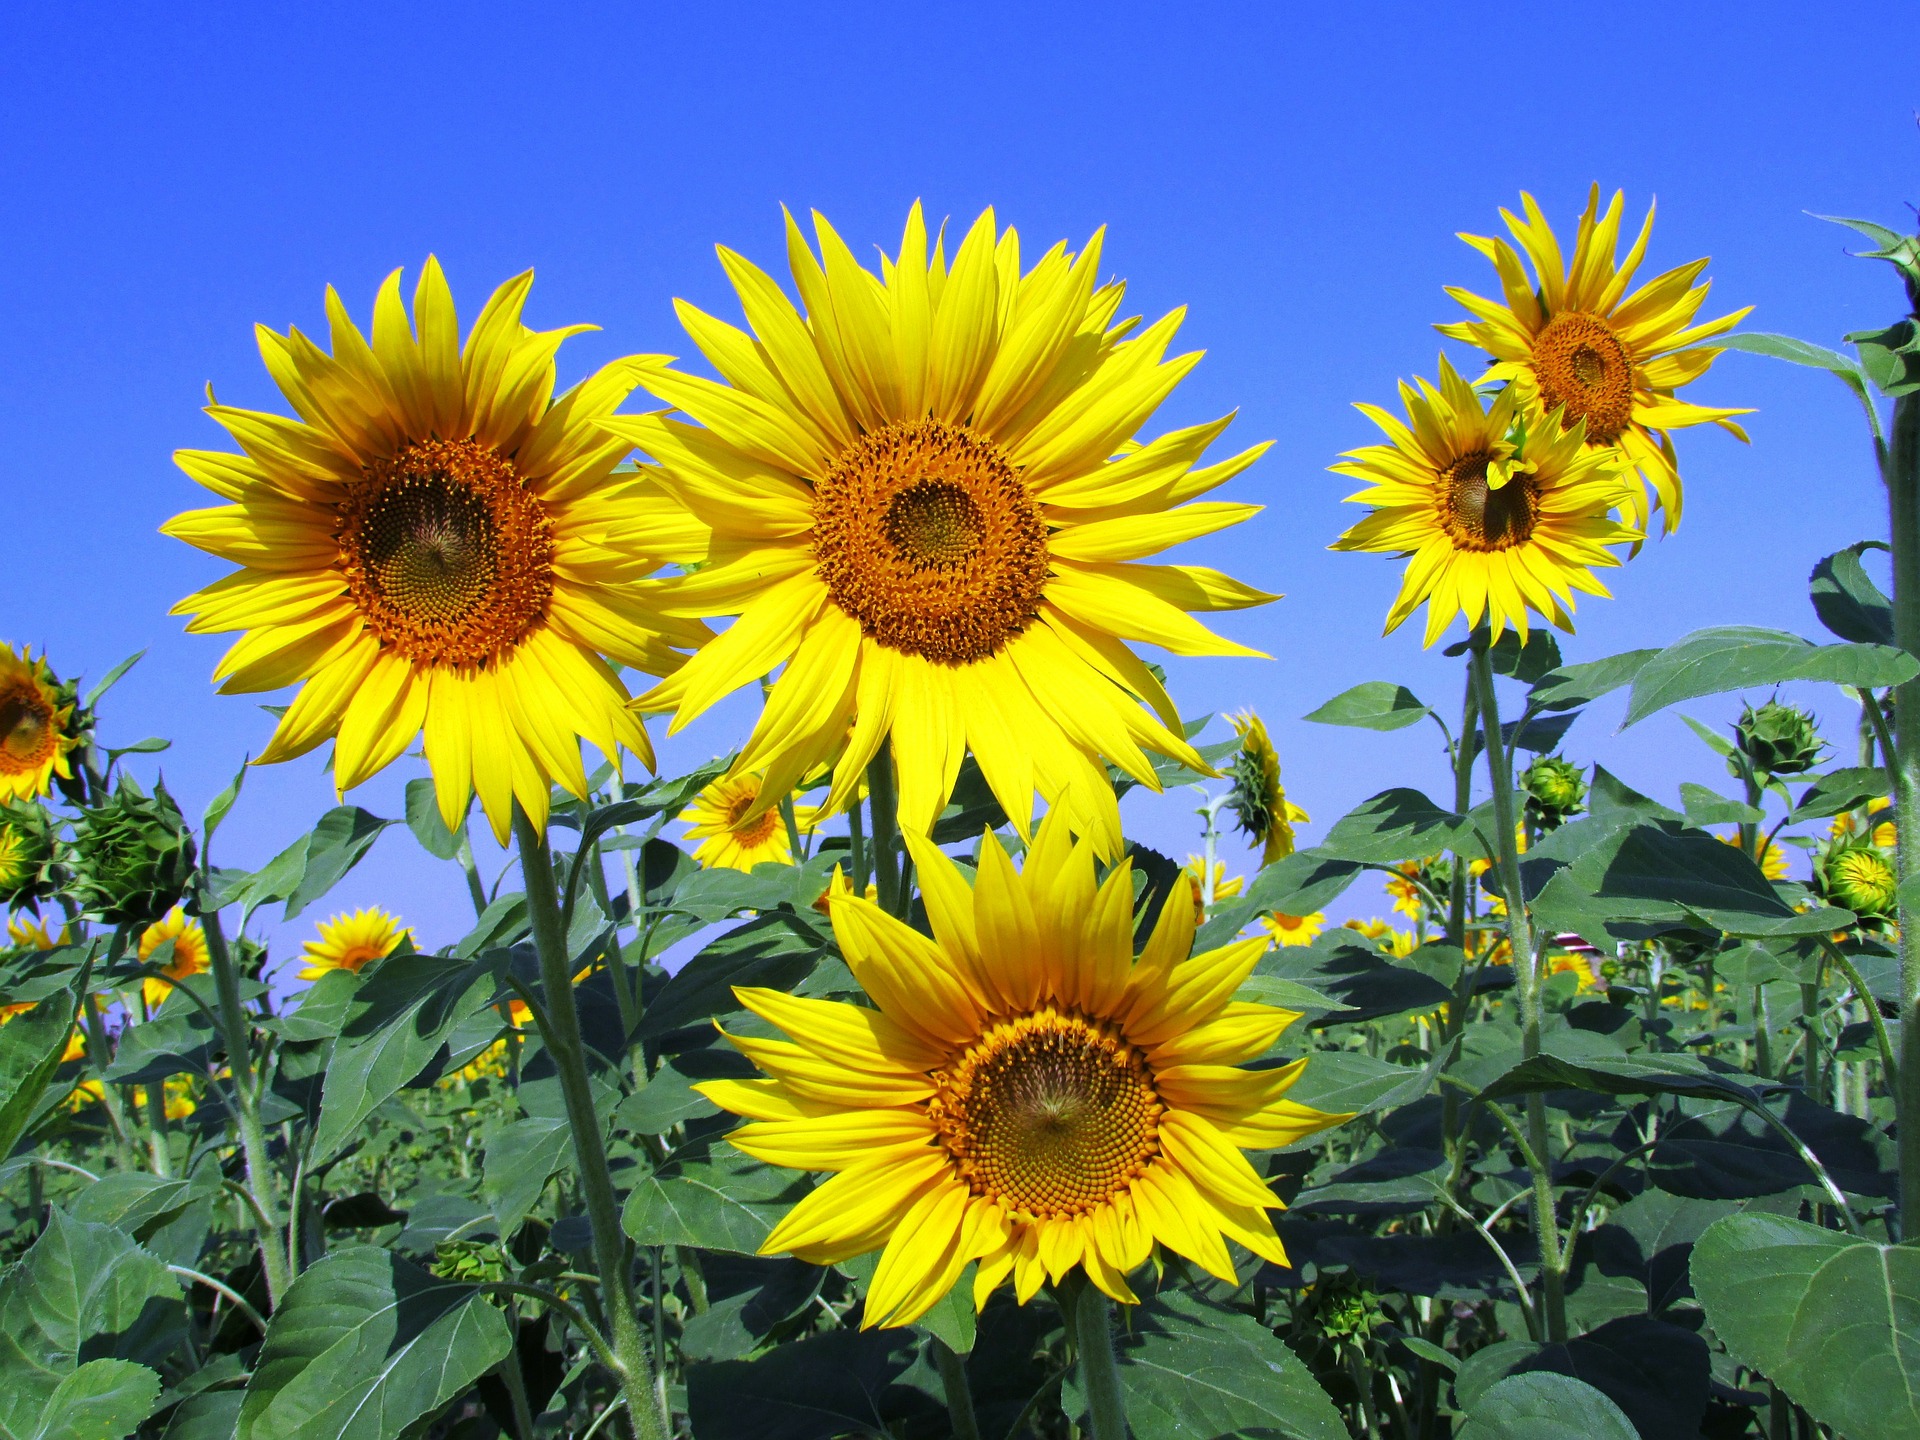 sunflowers-268015_1920.jpg